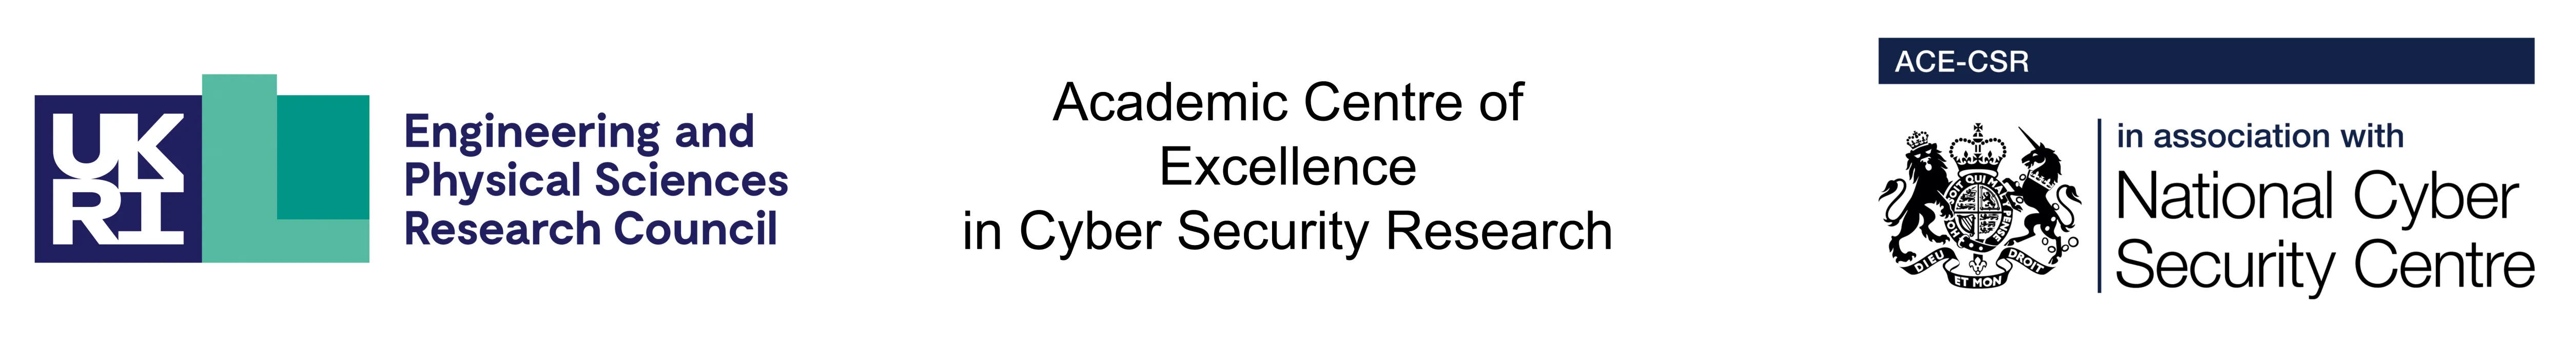 Cybersecurity Centre logos